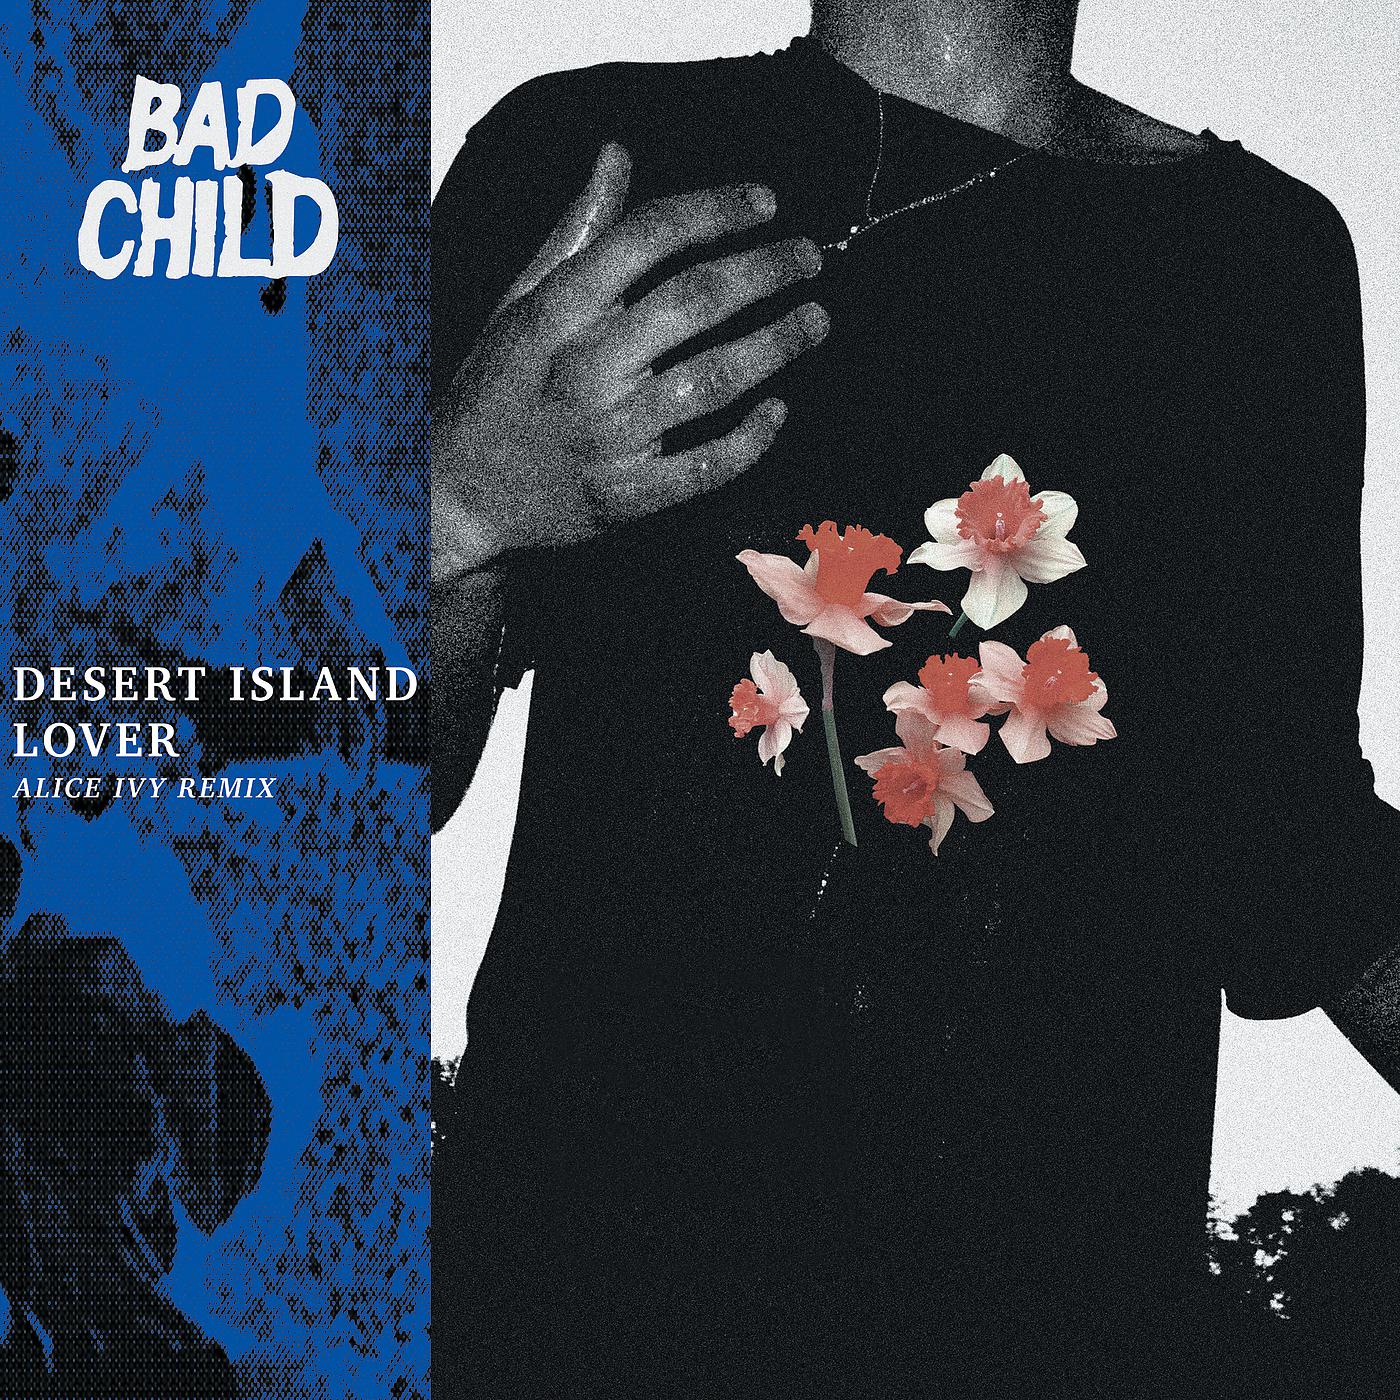 BAD CHILD - Desert Island Lover (Alice Ivy Remix)